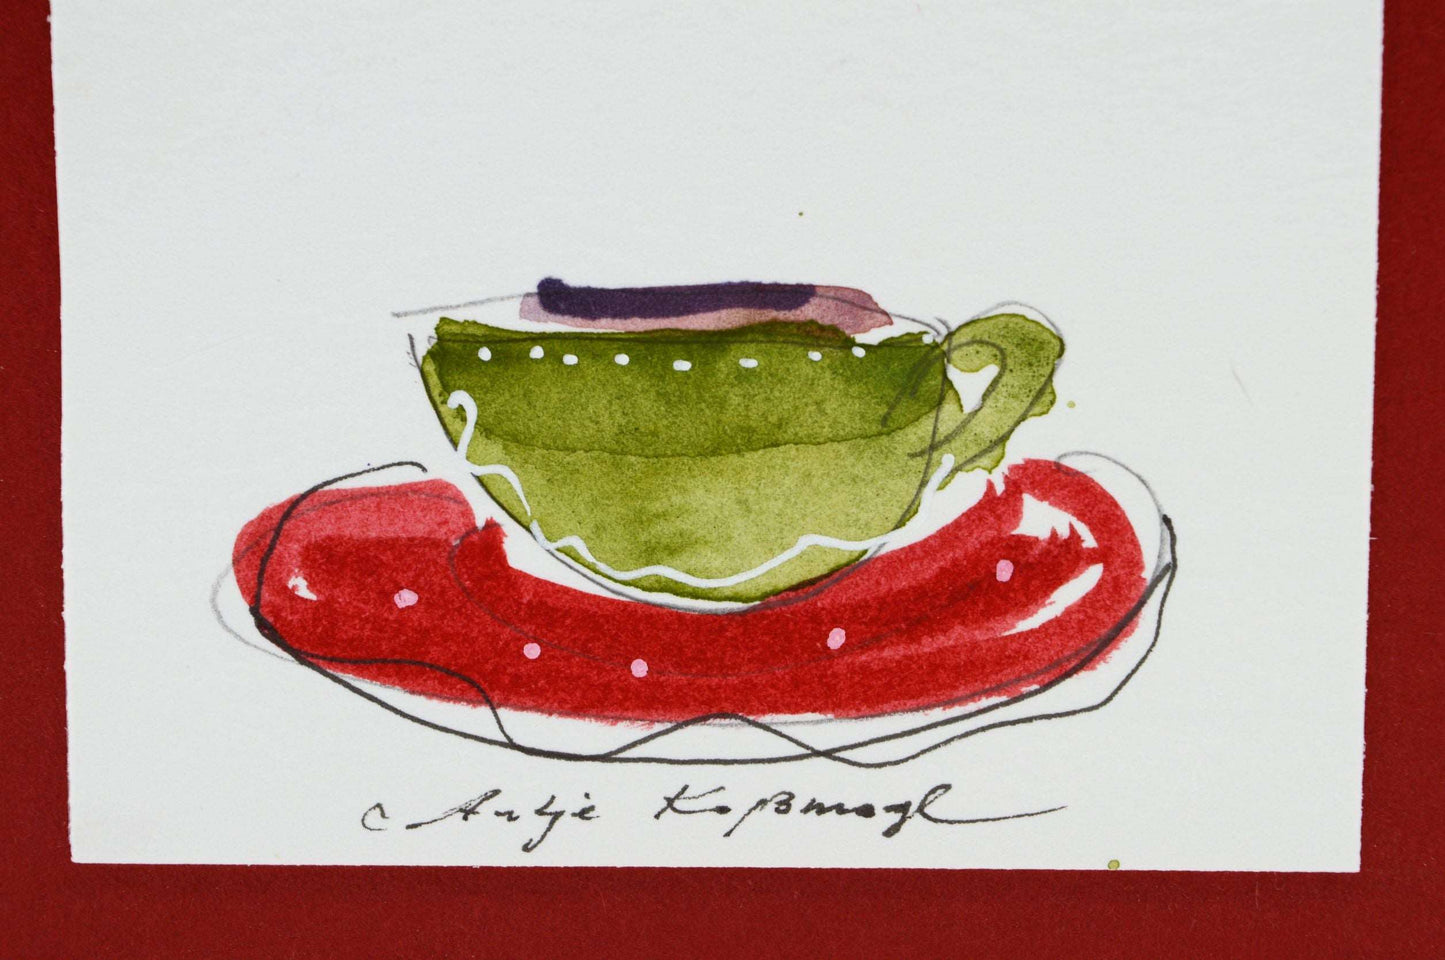 Coffee/Tea Cup Greeting Card Antje Koßmagk